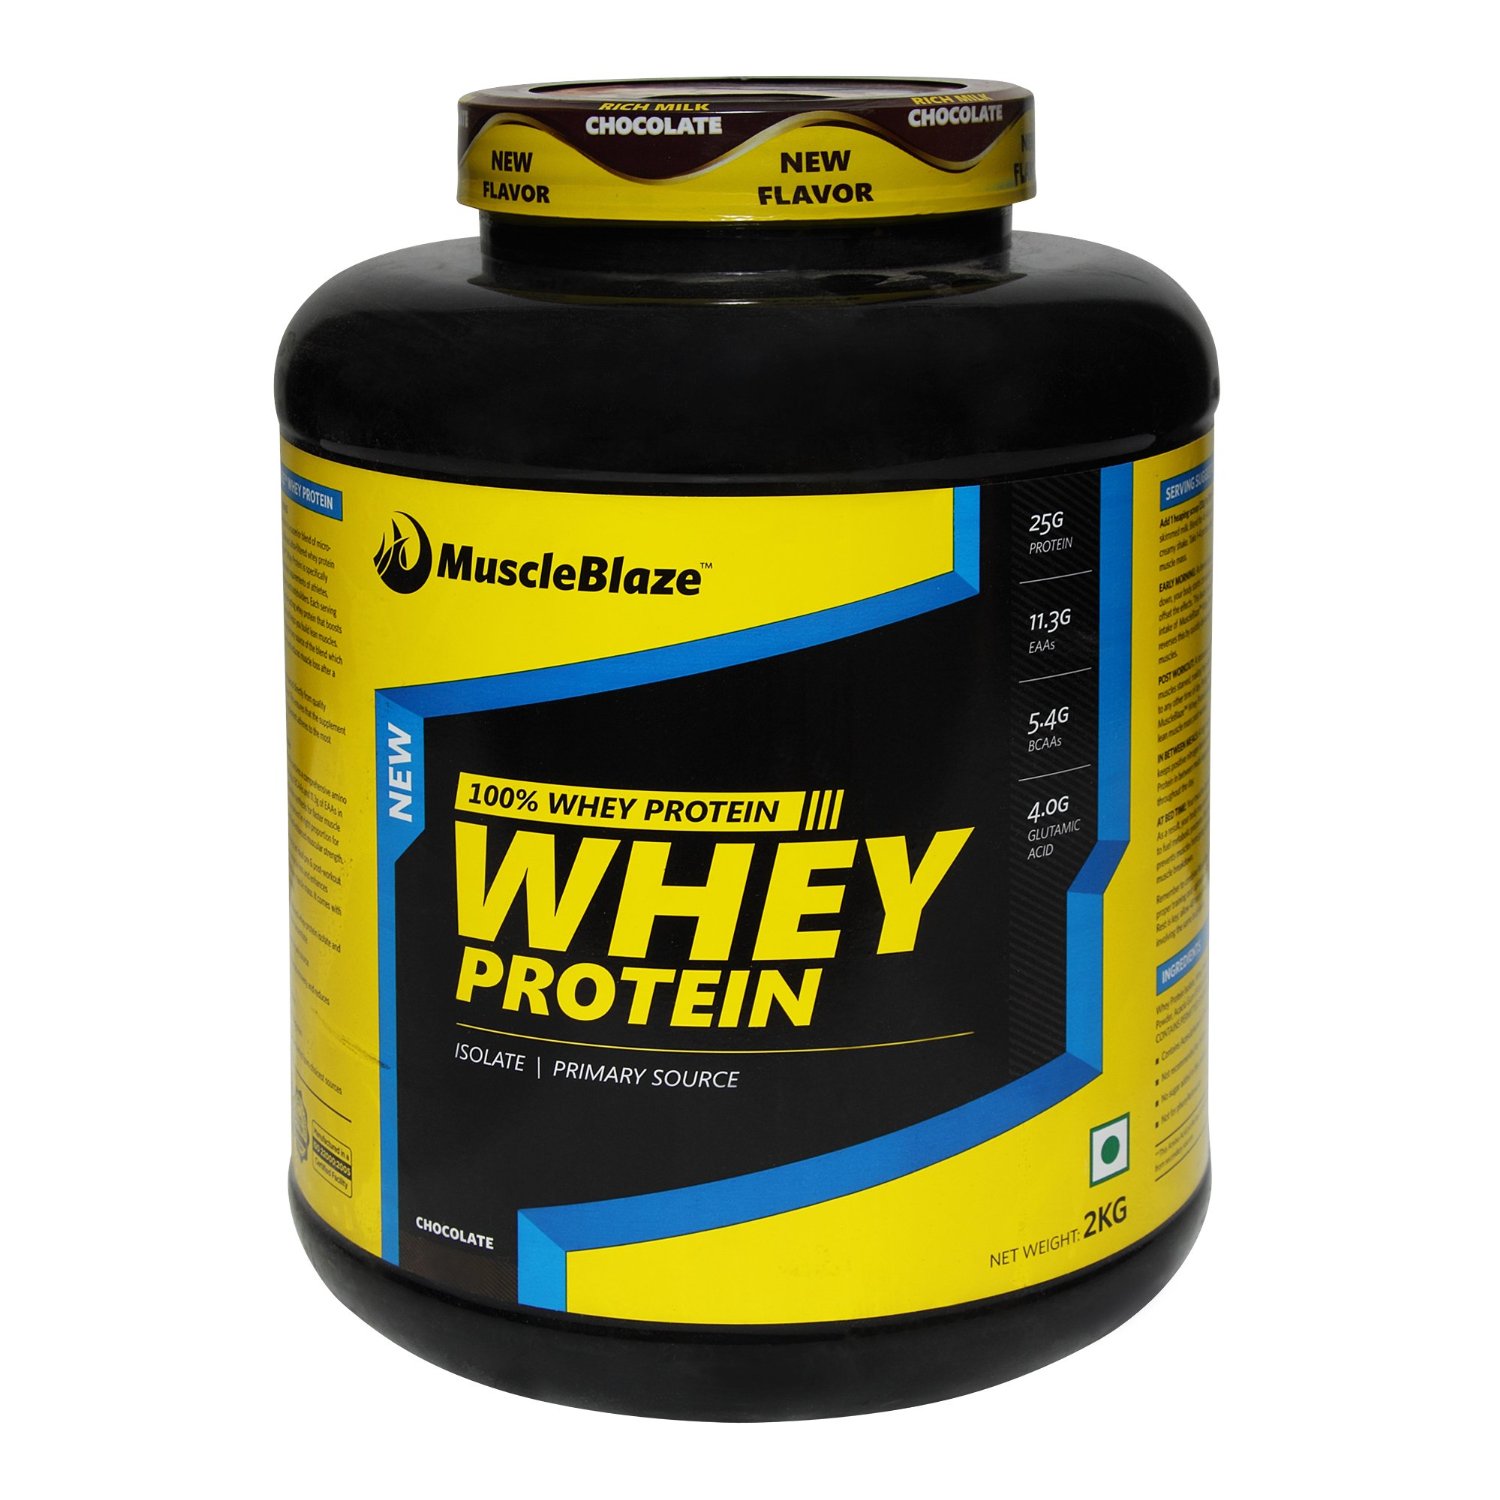 MuscleBlaze Whey Protein, Chocolate, 2kg